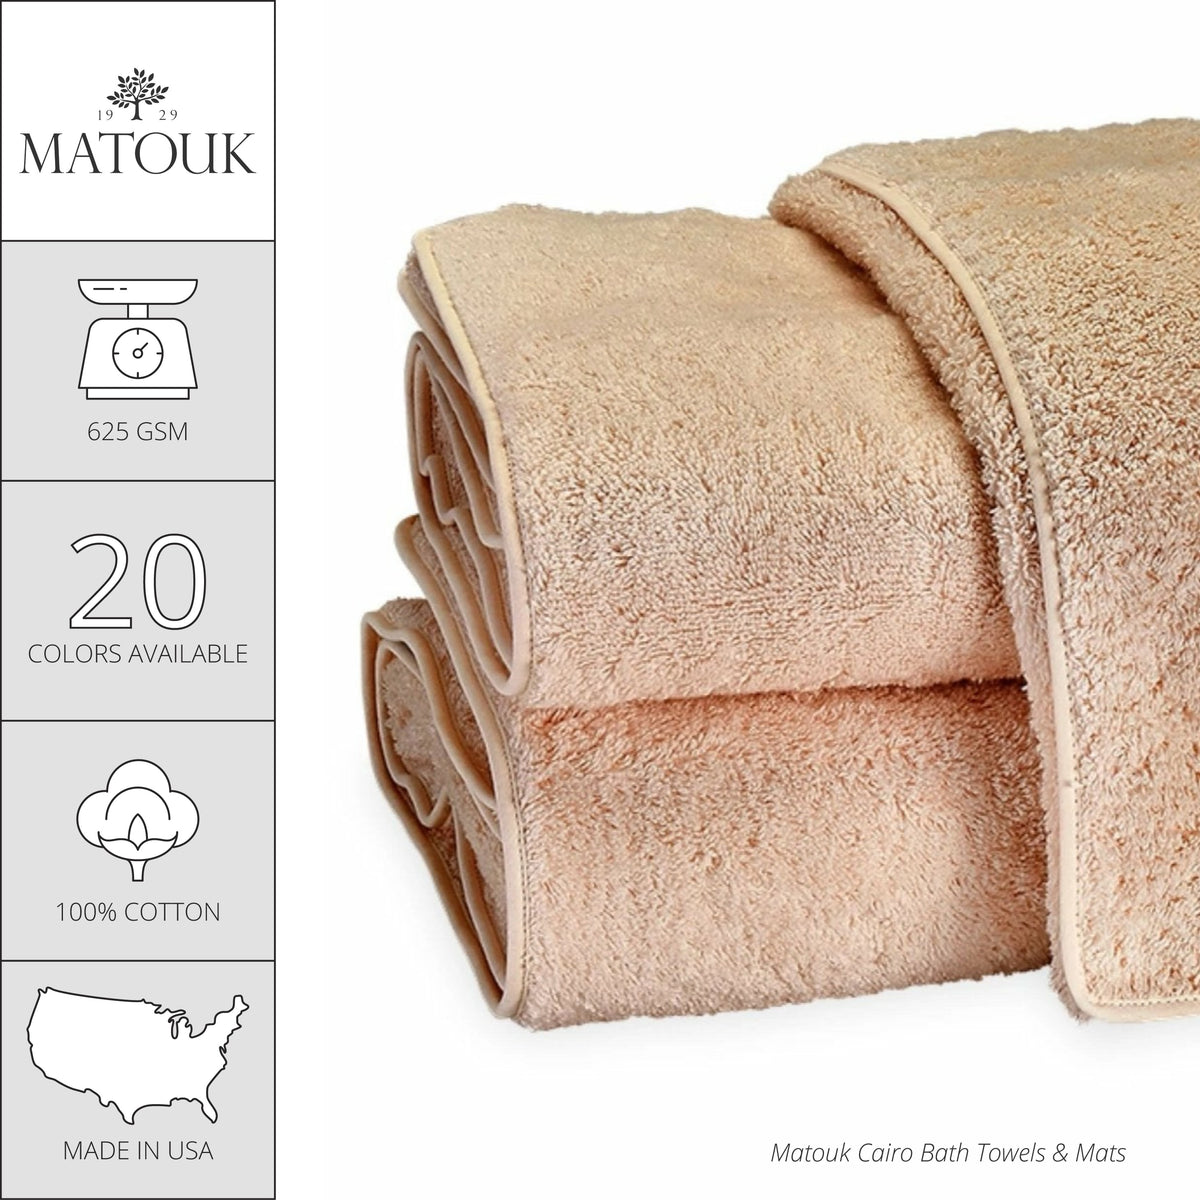 Matouk Cairo Bath Towels and Mats - White/Palm